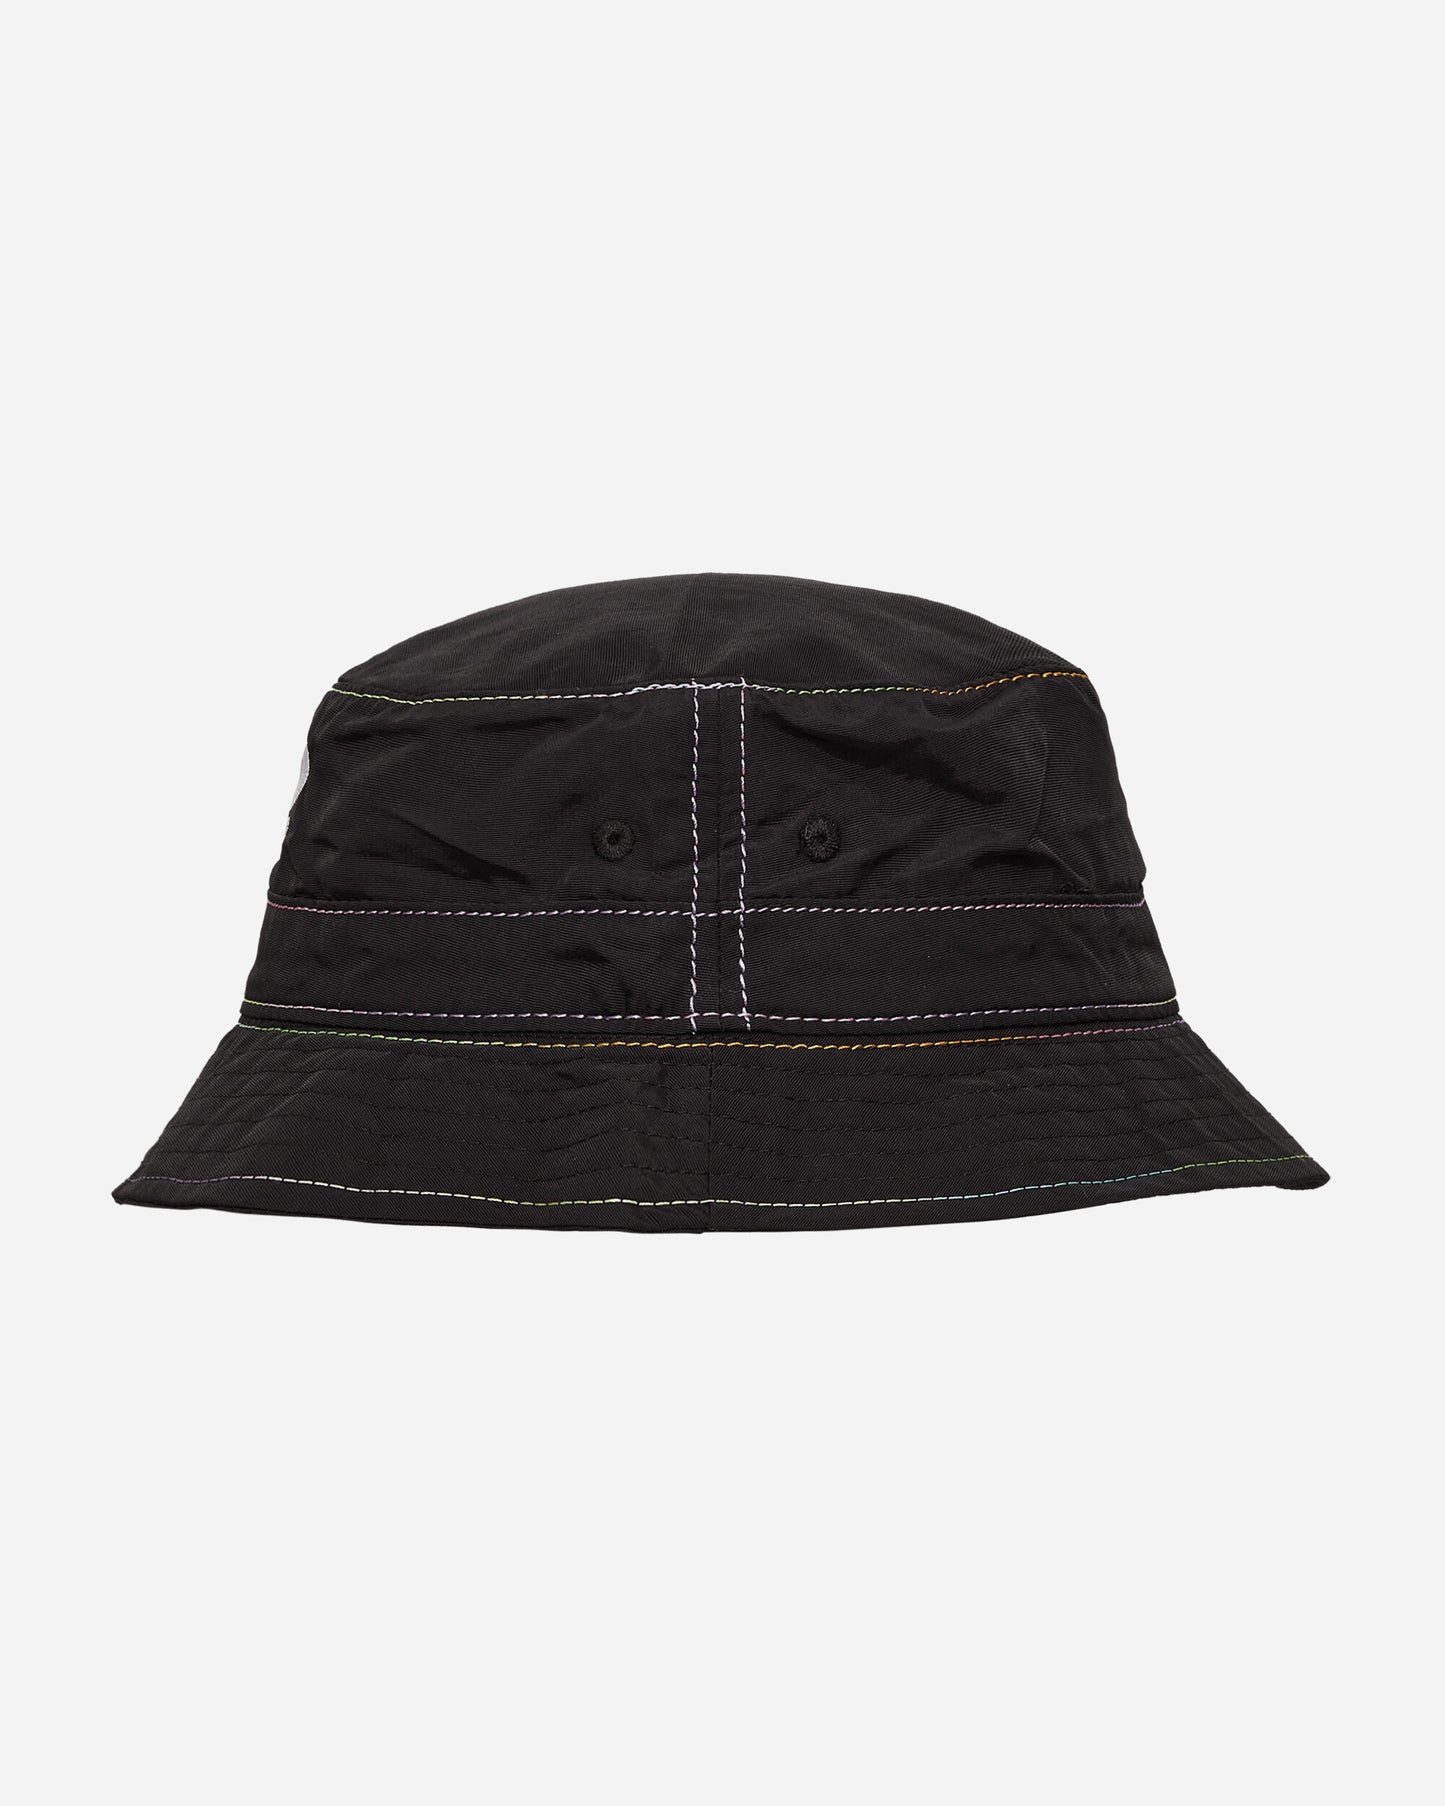 4 Worth Doing Gradient Stitch Nylon Bucket Black Hats Bucket 4WDSS23HT5 BLACK